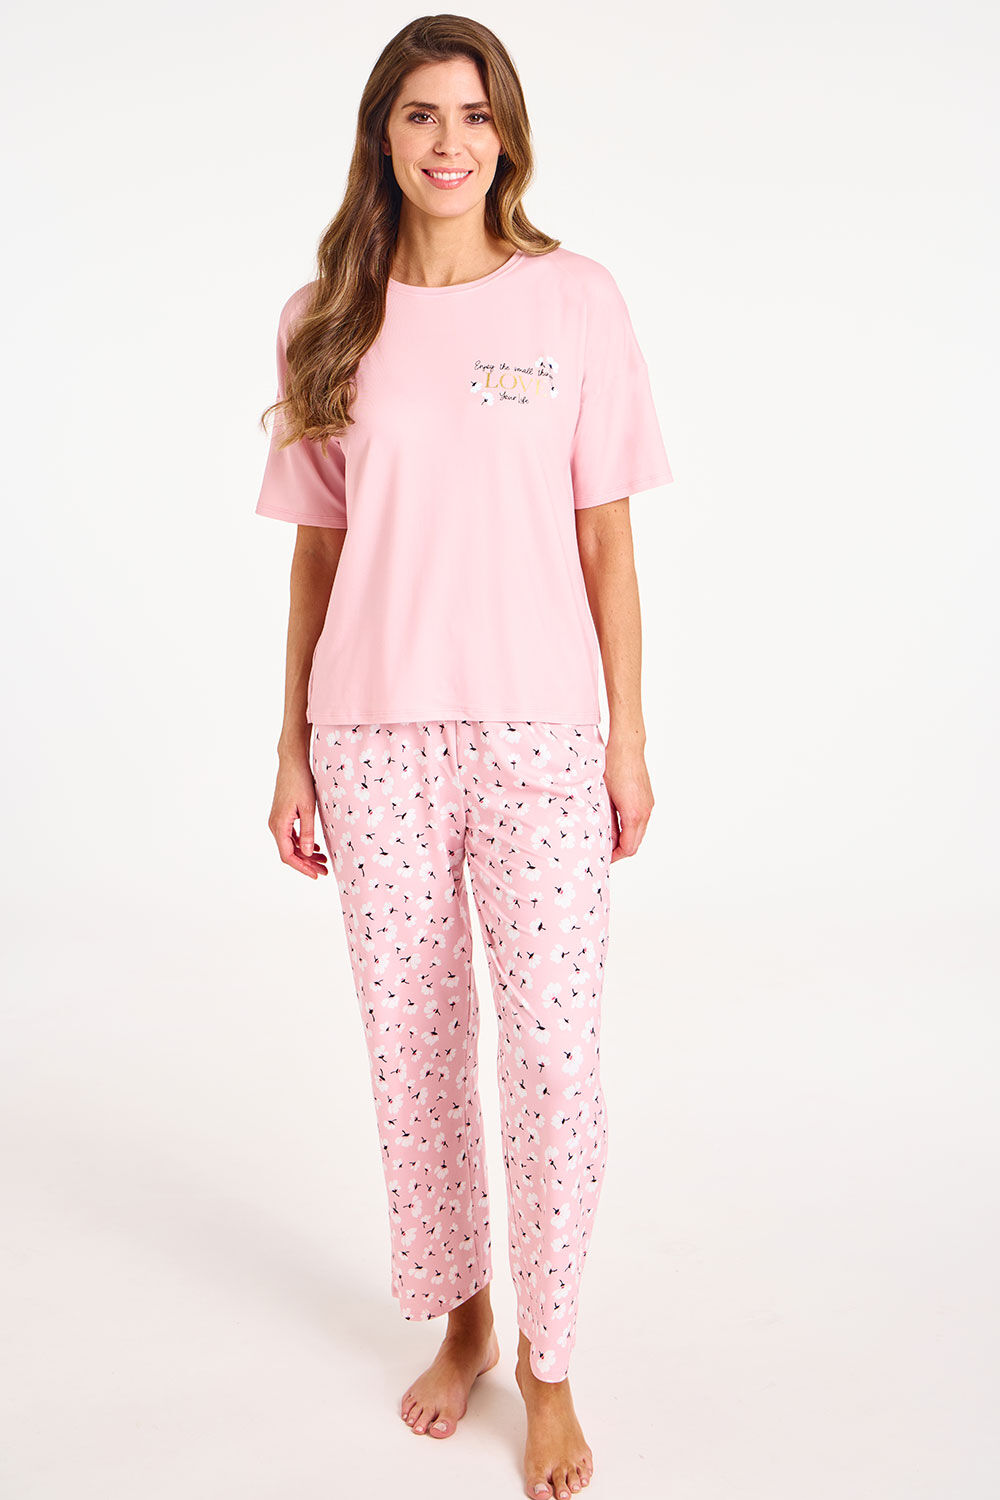 Bonmarche Short Sleeve Pink Floral Foil Print Pyjama Set, Size: 24-26